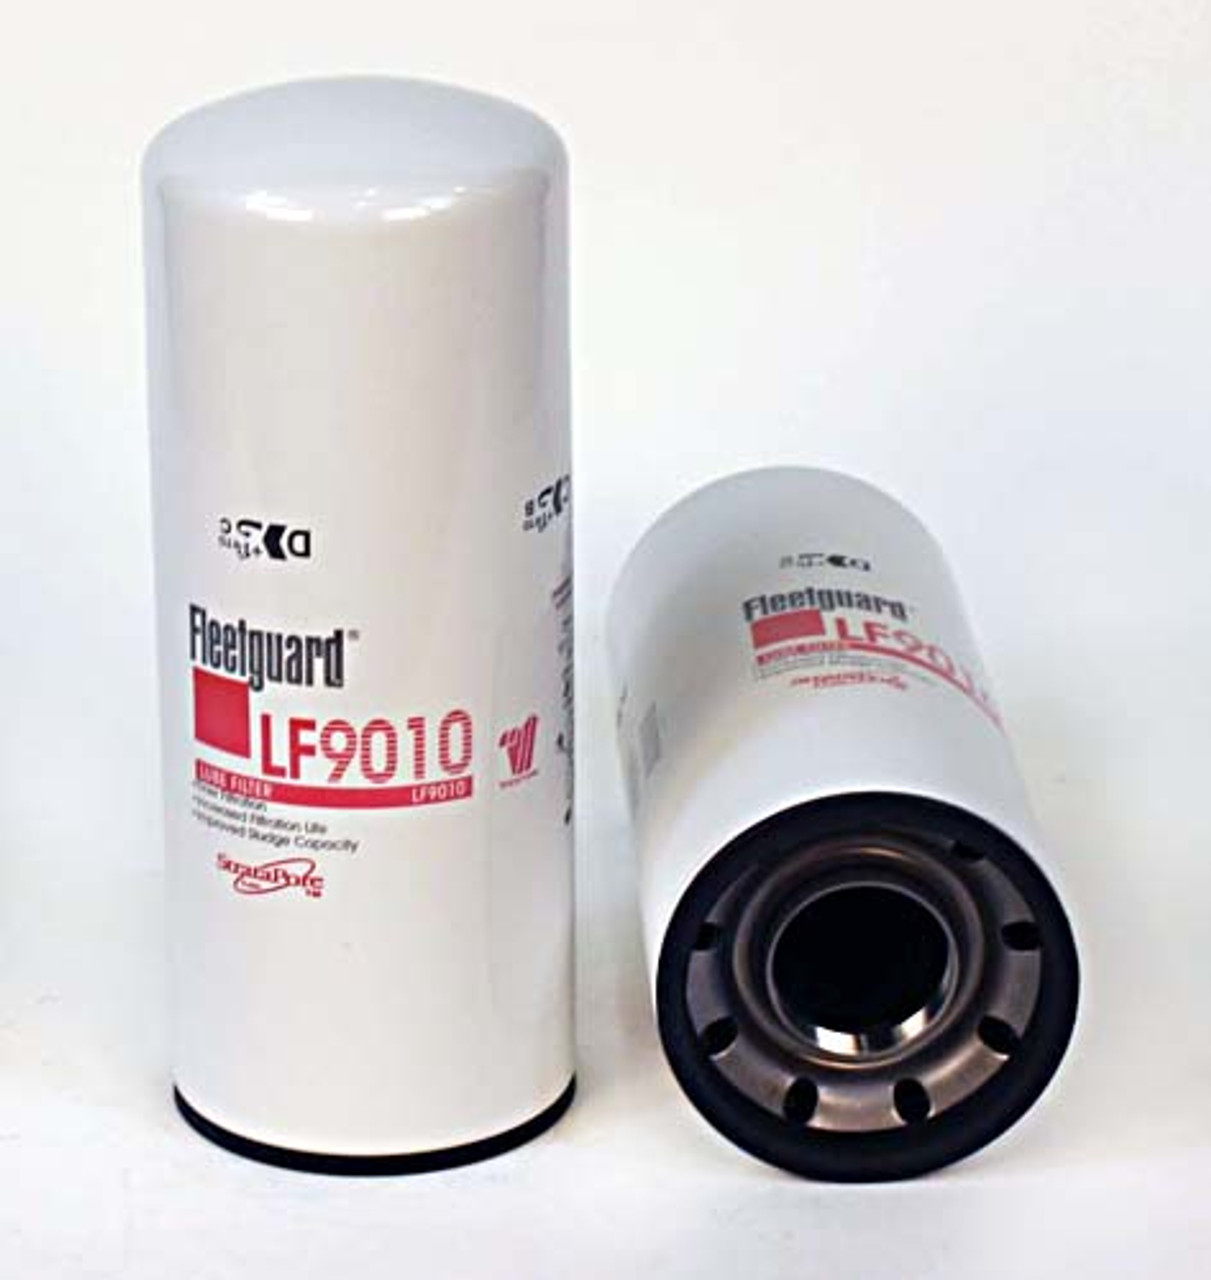 LF9010: Fleetguard Oil Filter